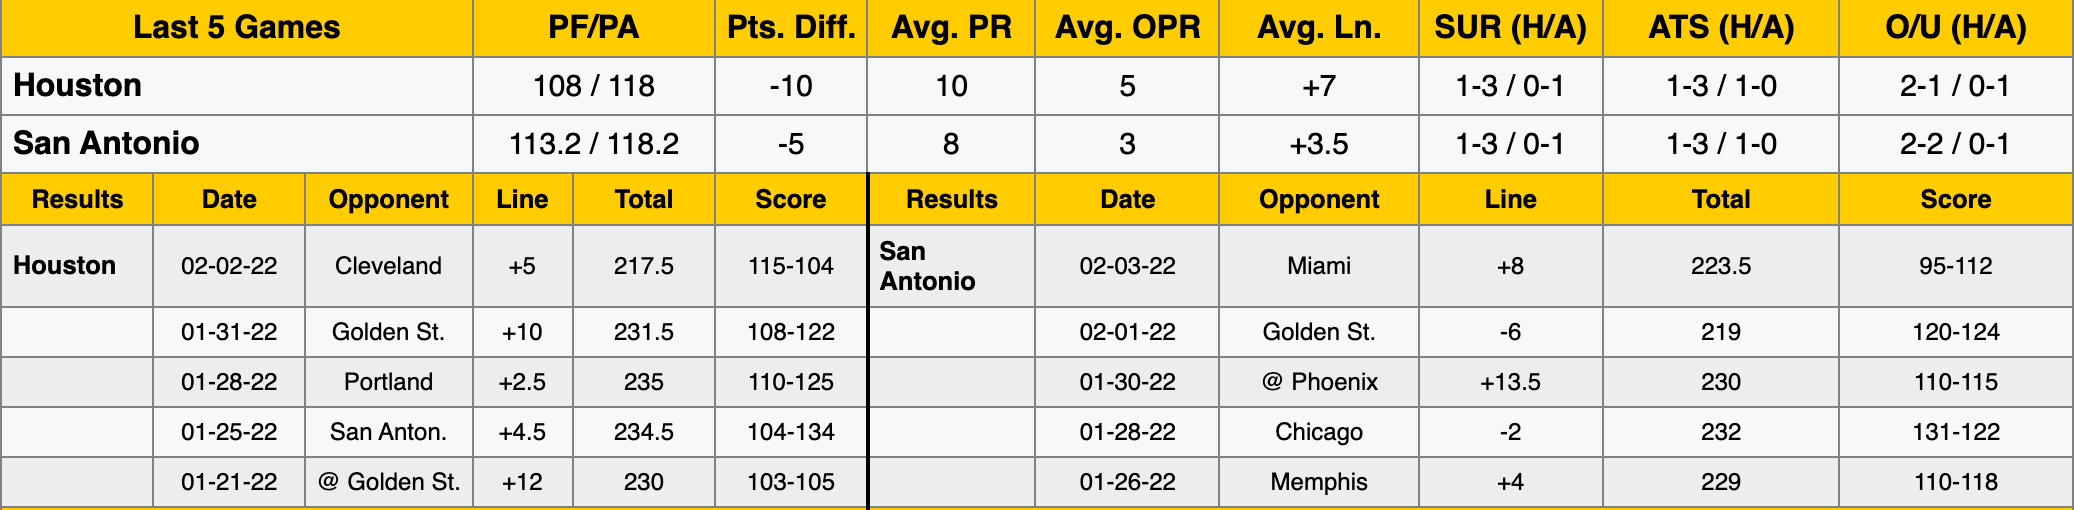 Houston Rockets at San Antonio Spurs Data